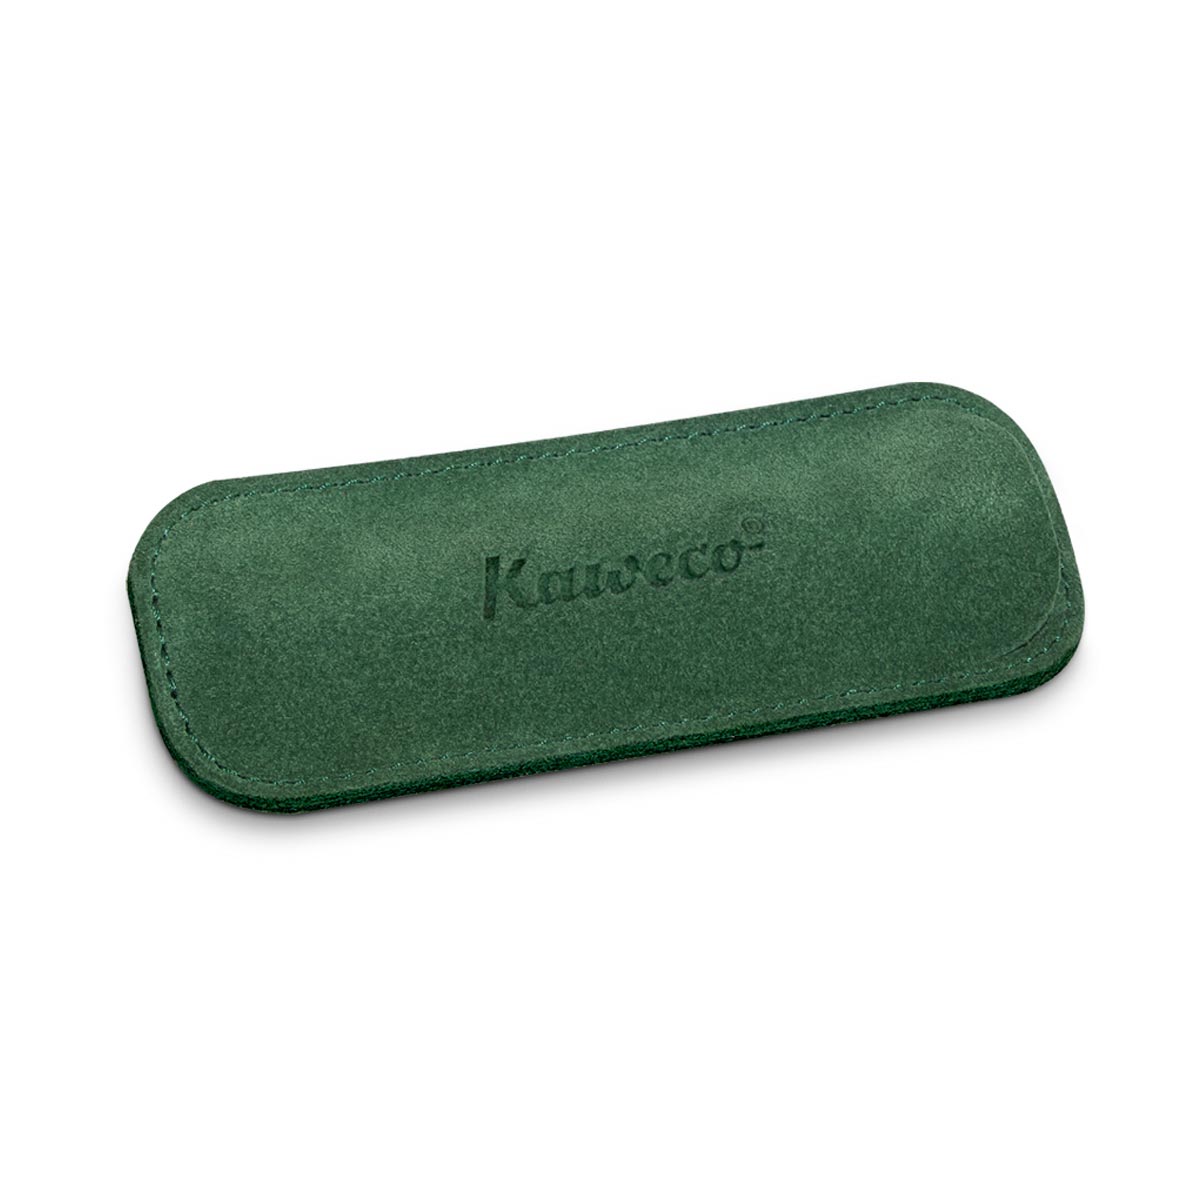 Kaweco Sport Eco Etui, 2er Velours grün